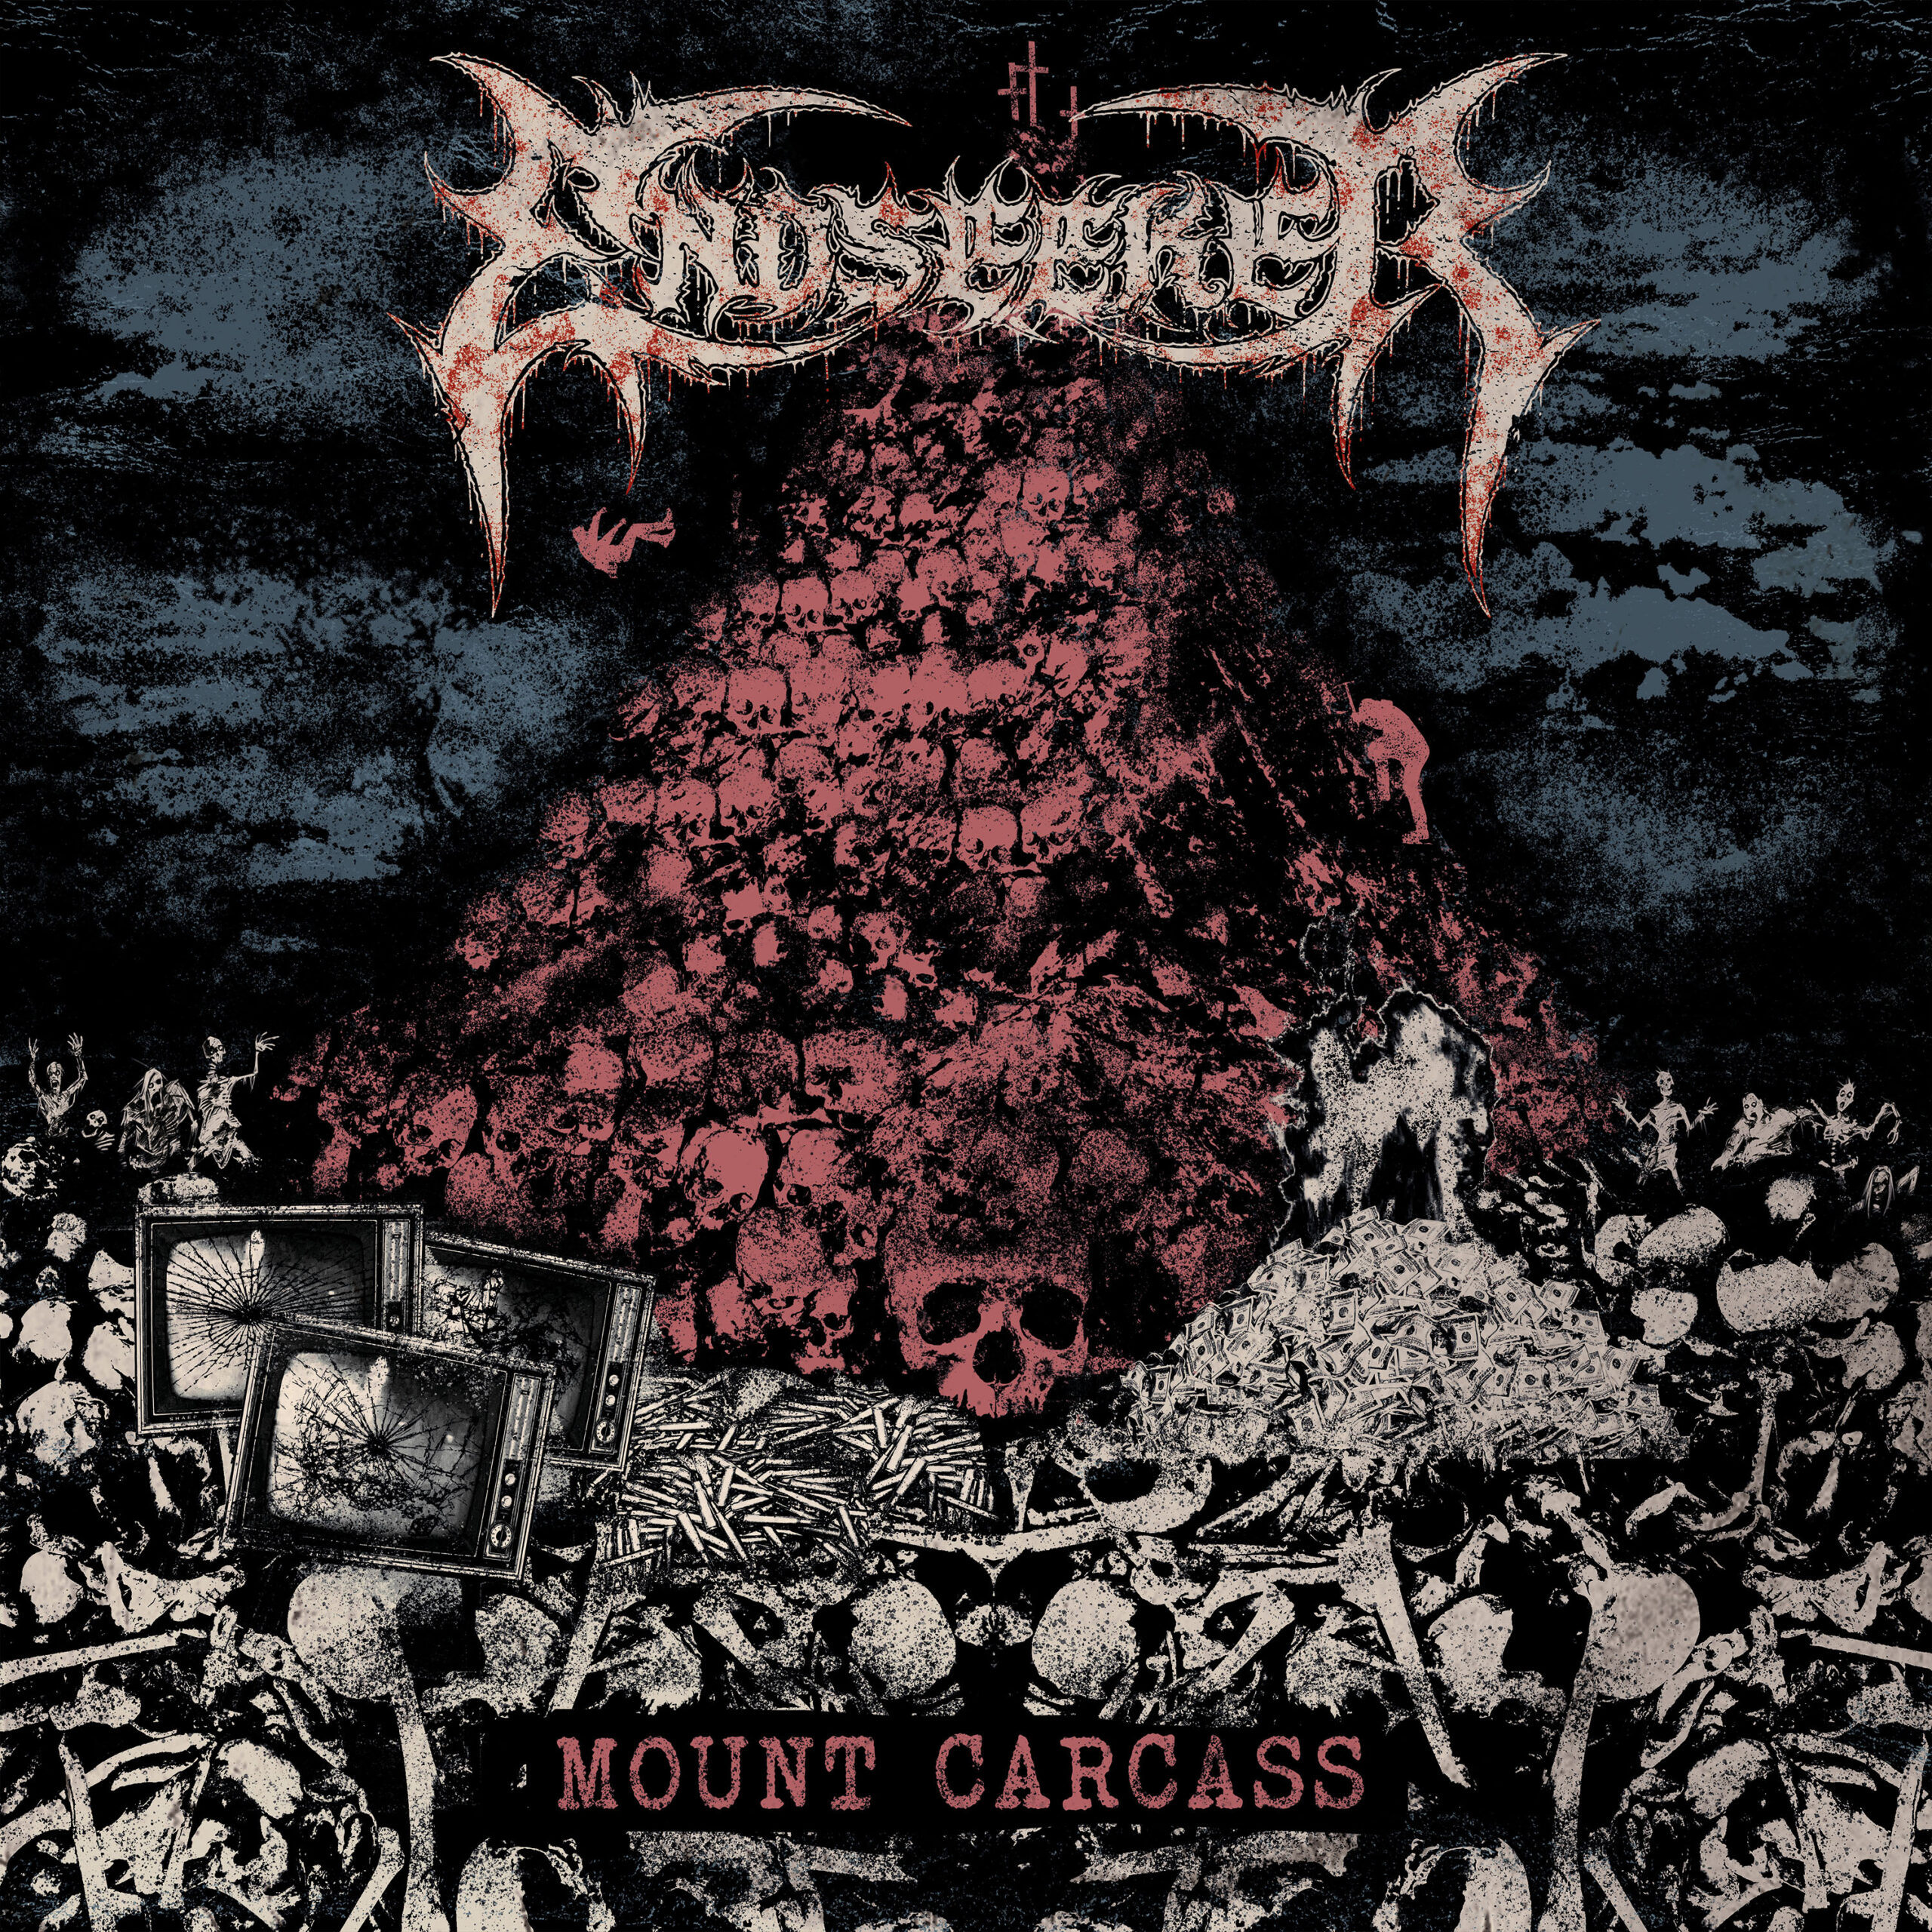 Endseeker - Mount Carcass - albumcover 2021